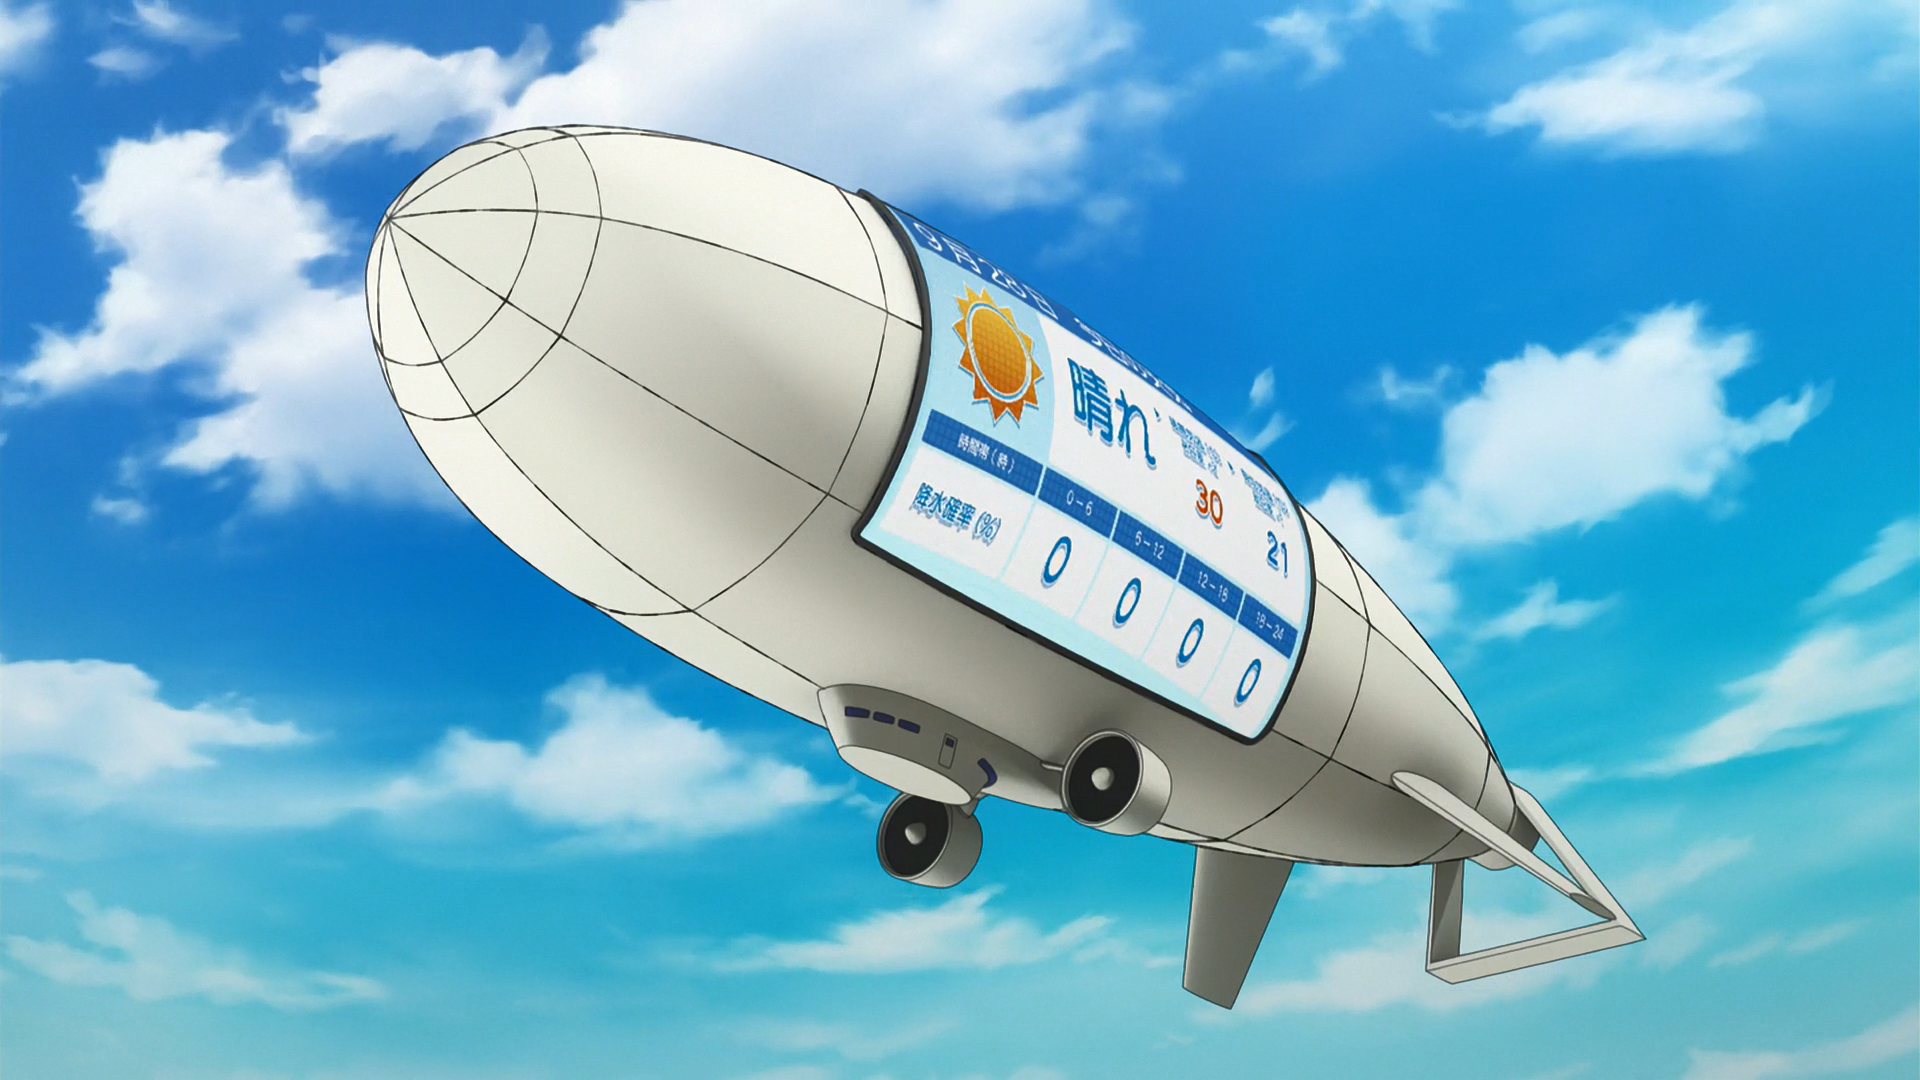 Ananyadesigns Anime airship-pixiv-fantasia Wallposter Paper Print -  Animation & Cartoons posters in India - Buy art, film, design, movie,  music, nature and educational paintings/wallpapers at Flipkart.com